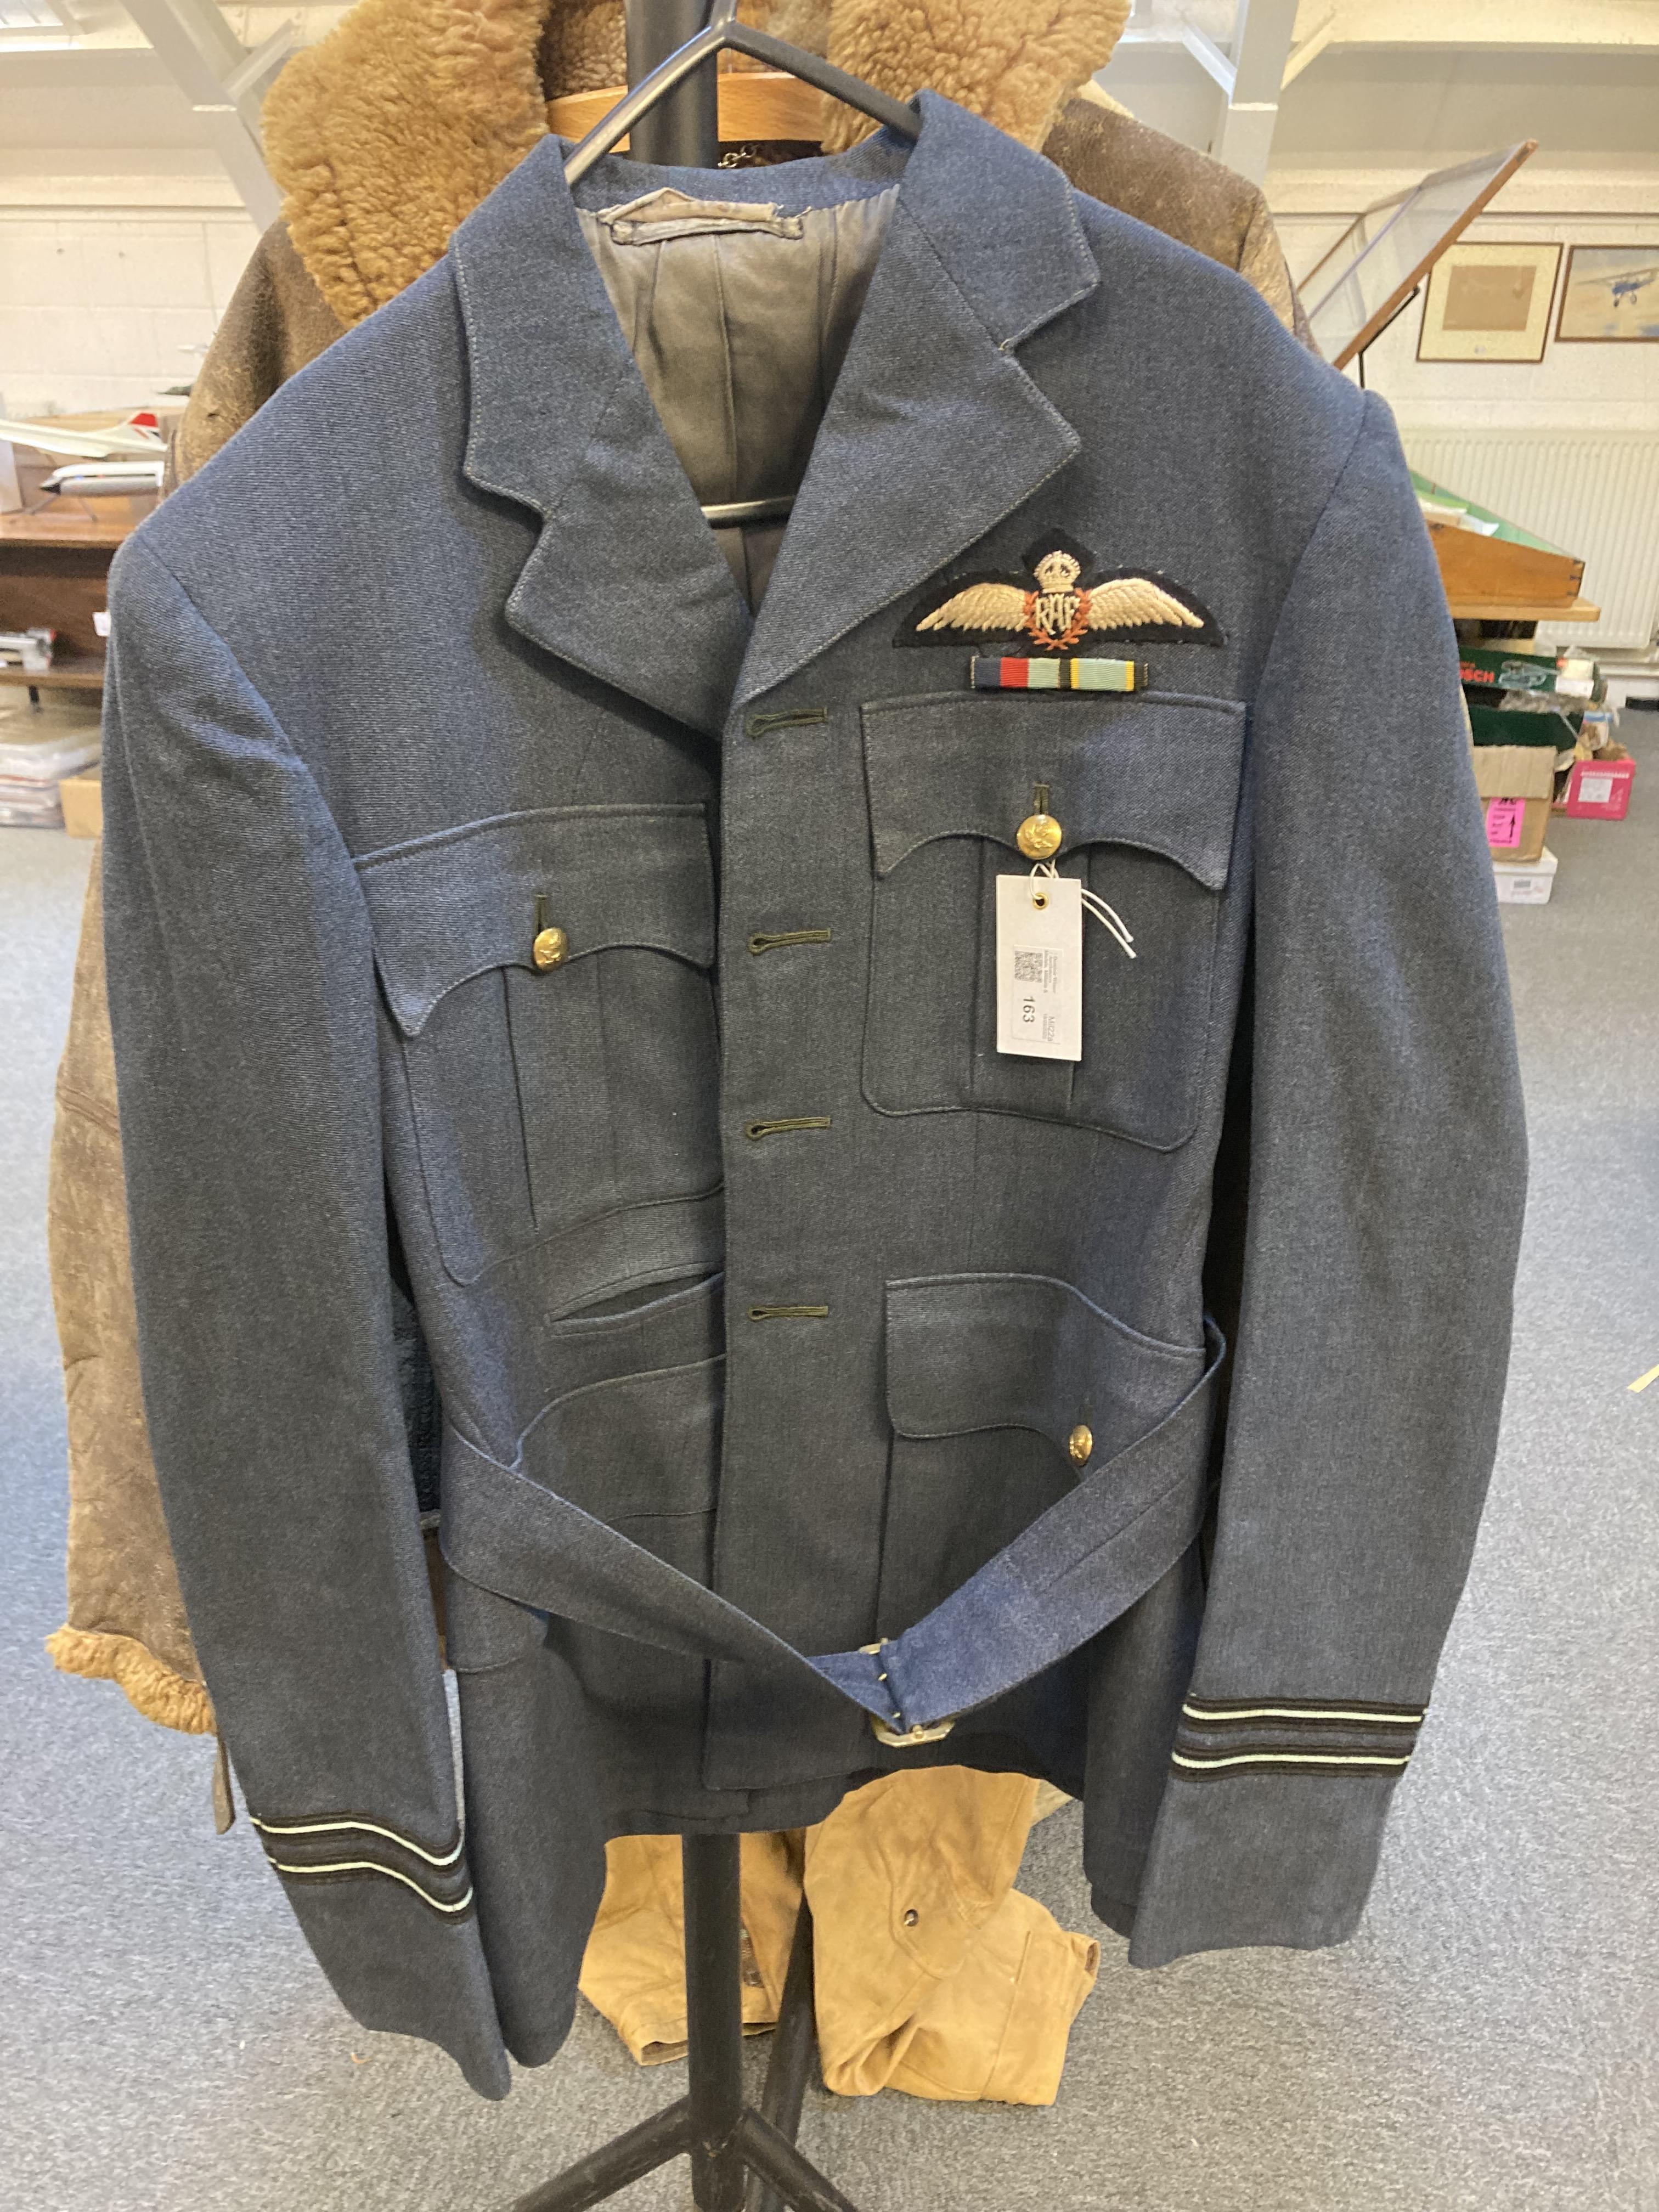 Lot 163 - RAF Tunic. A WWII RAF Officer's tunic worn